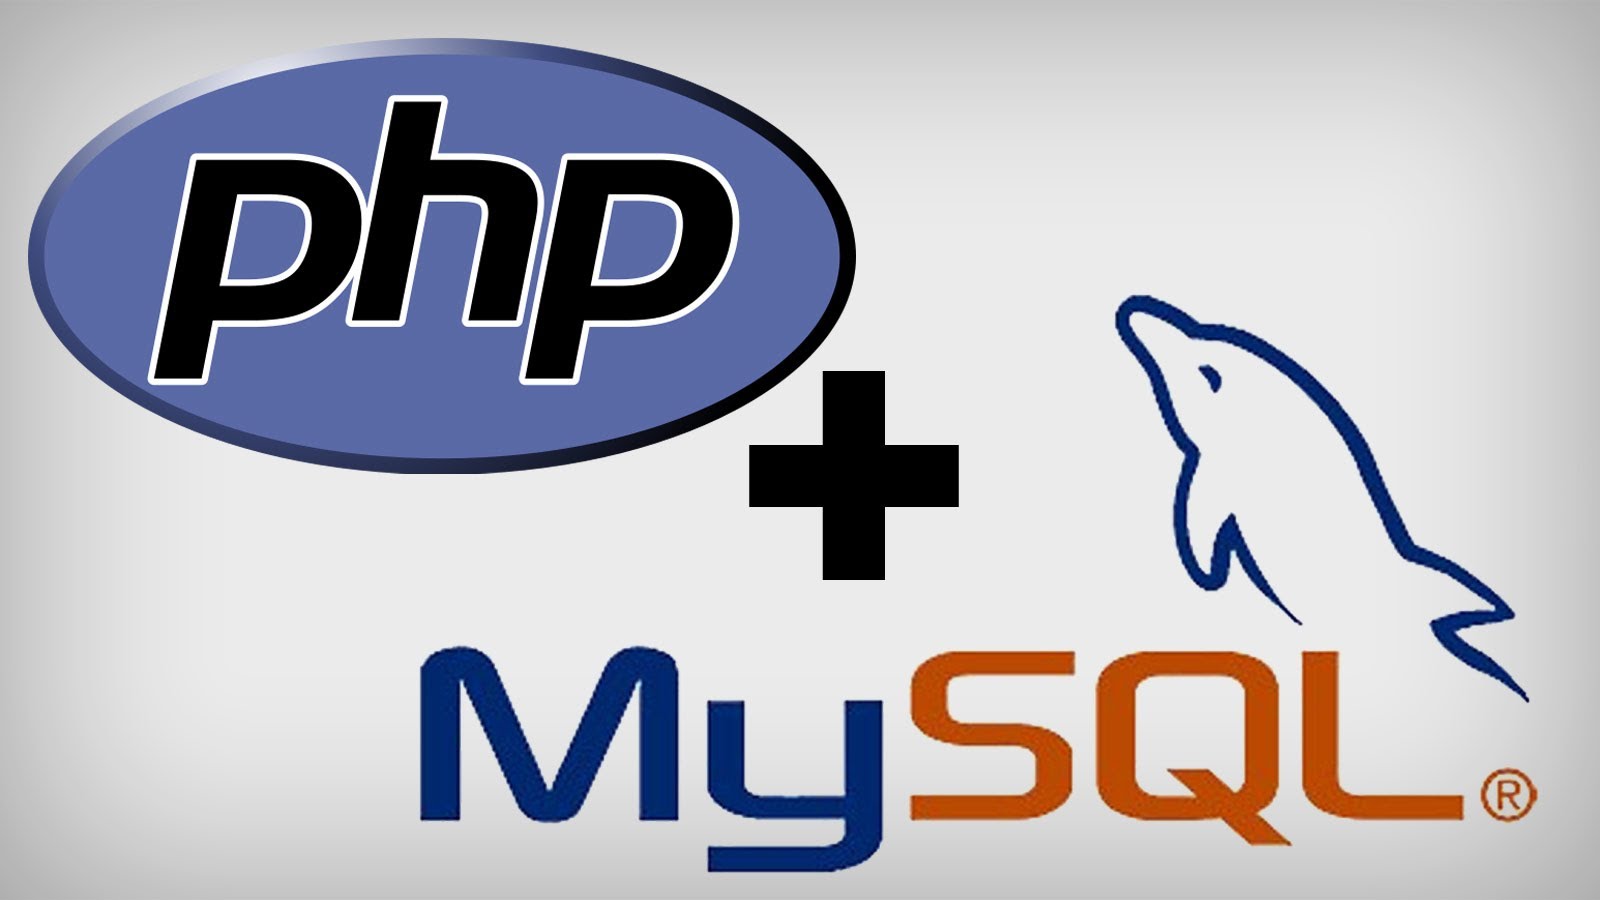 Http shops html. Php. Php логотип. Php язык программирования. Php картинка.